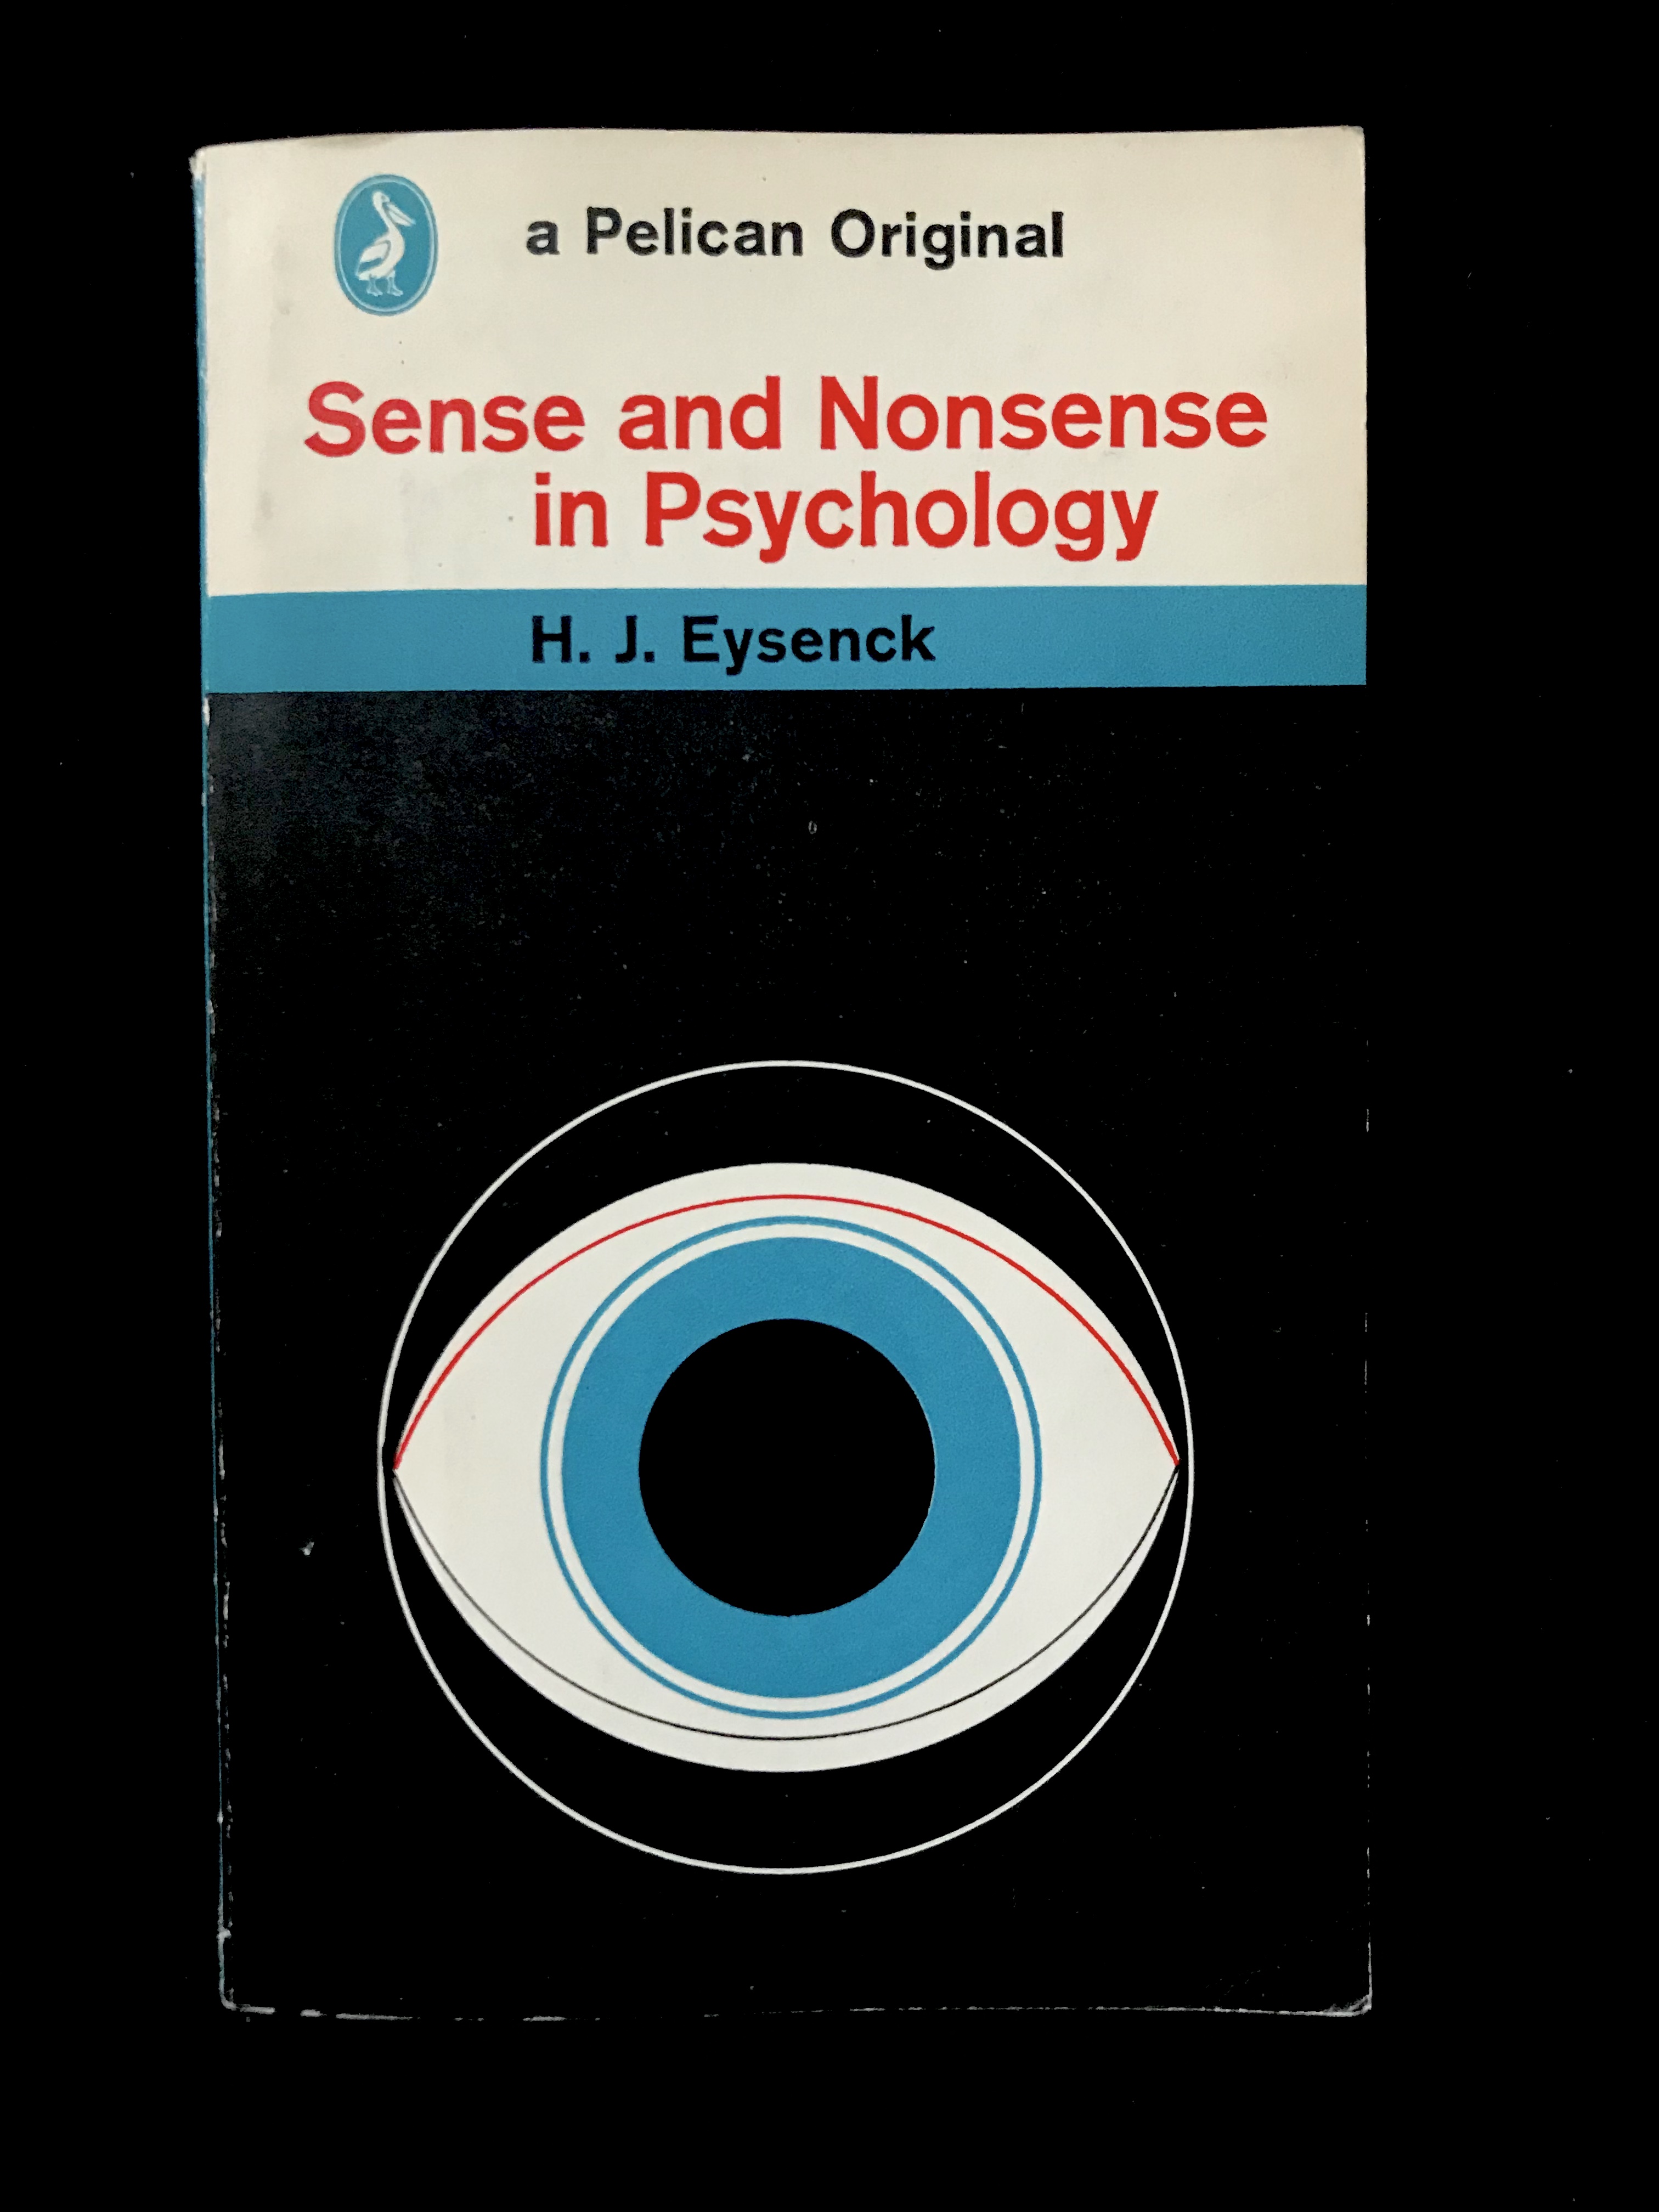 Sense & Nonsense in Psychology by H. J. Eysenck